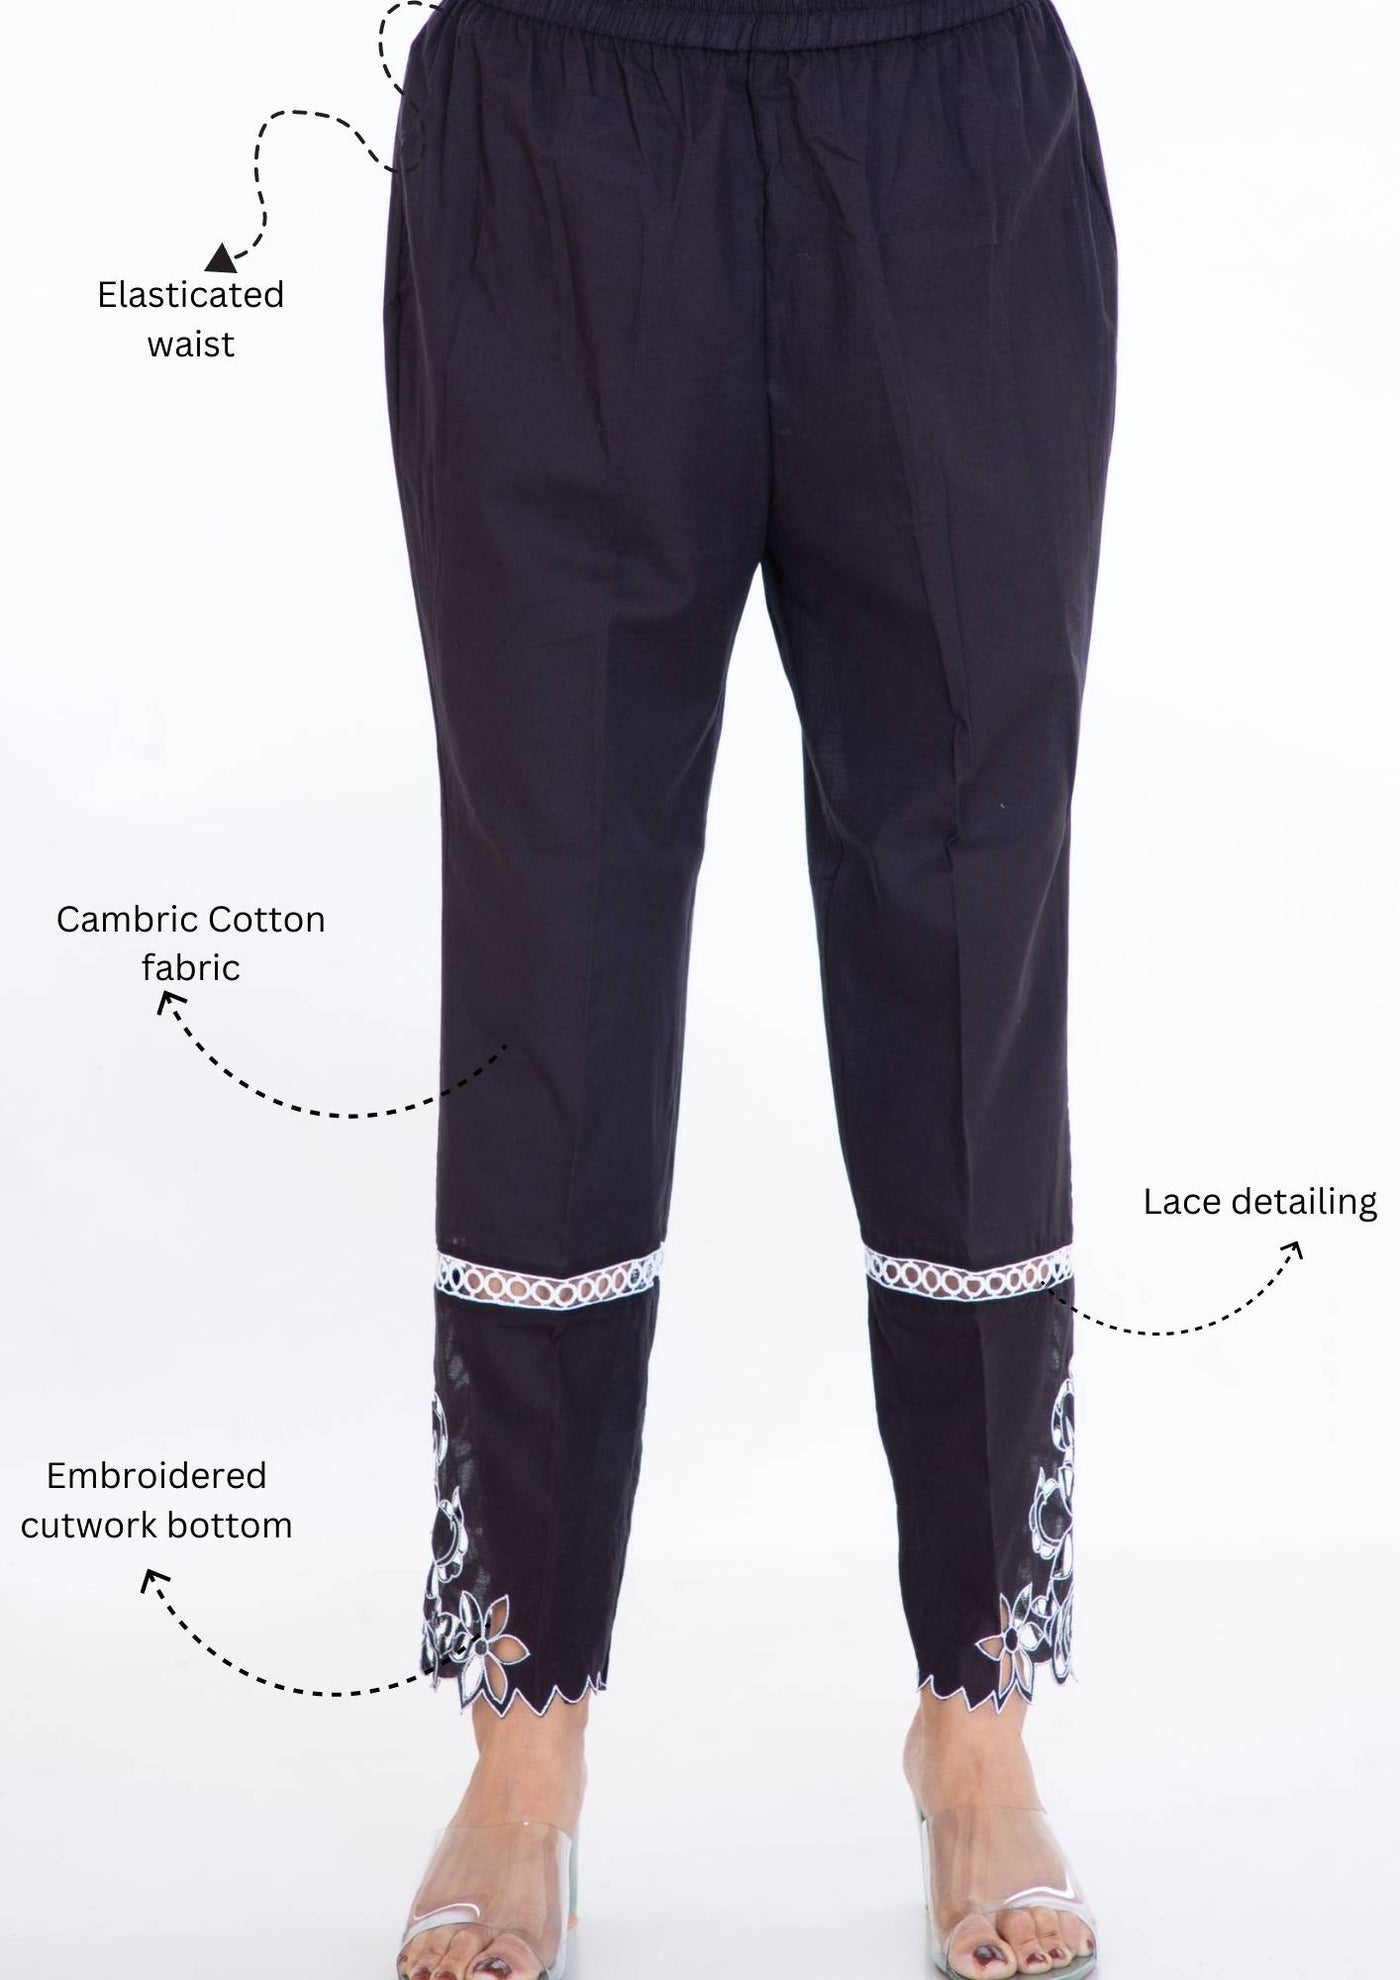 Work pants - Edelrid - anti-cut / high-visibility / cotton